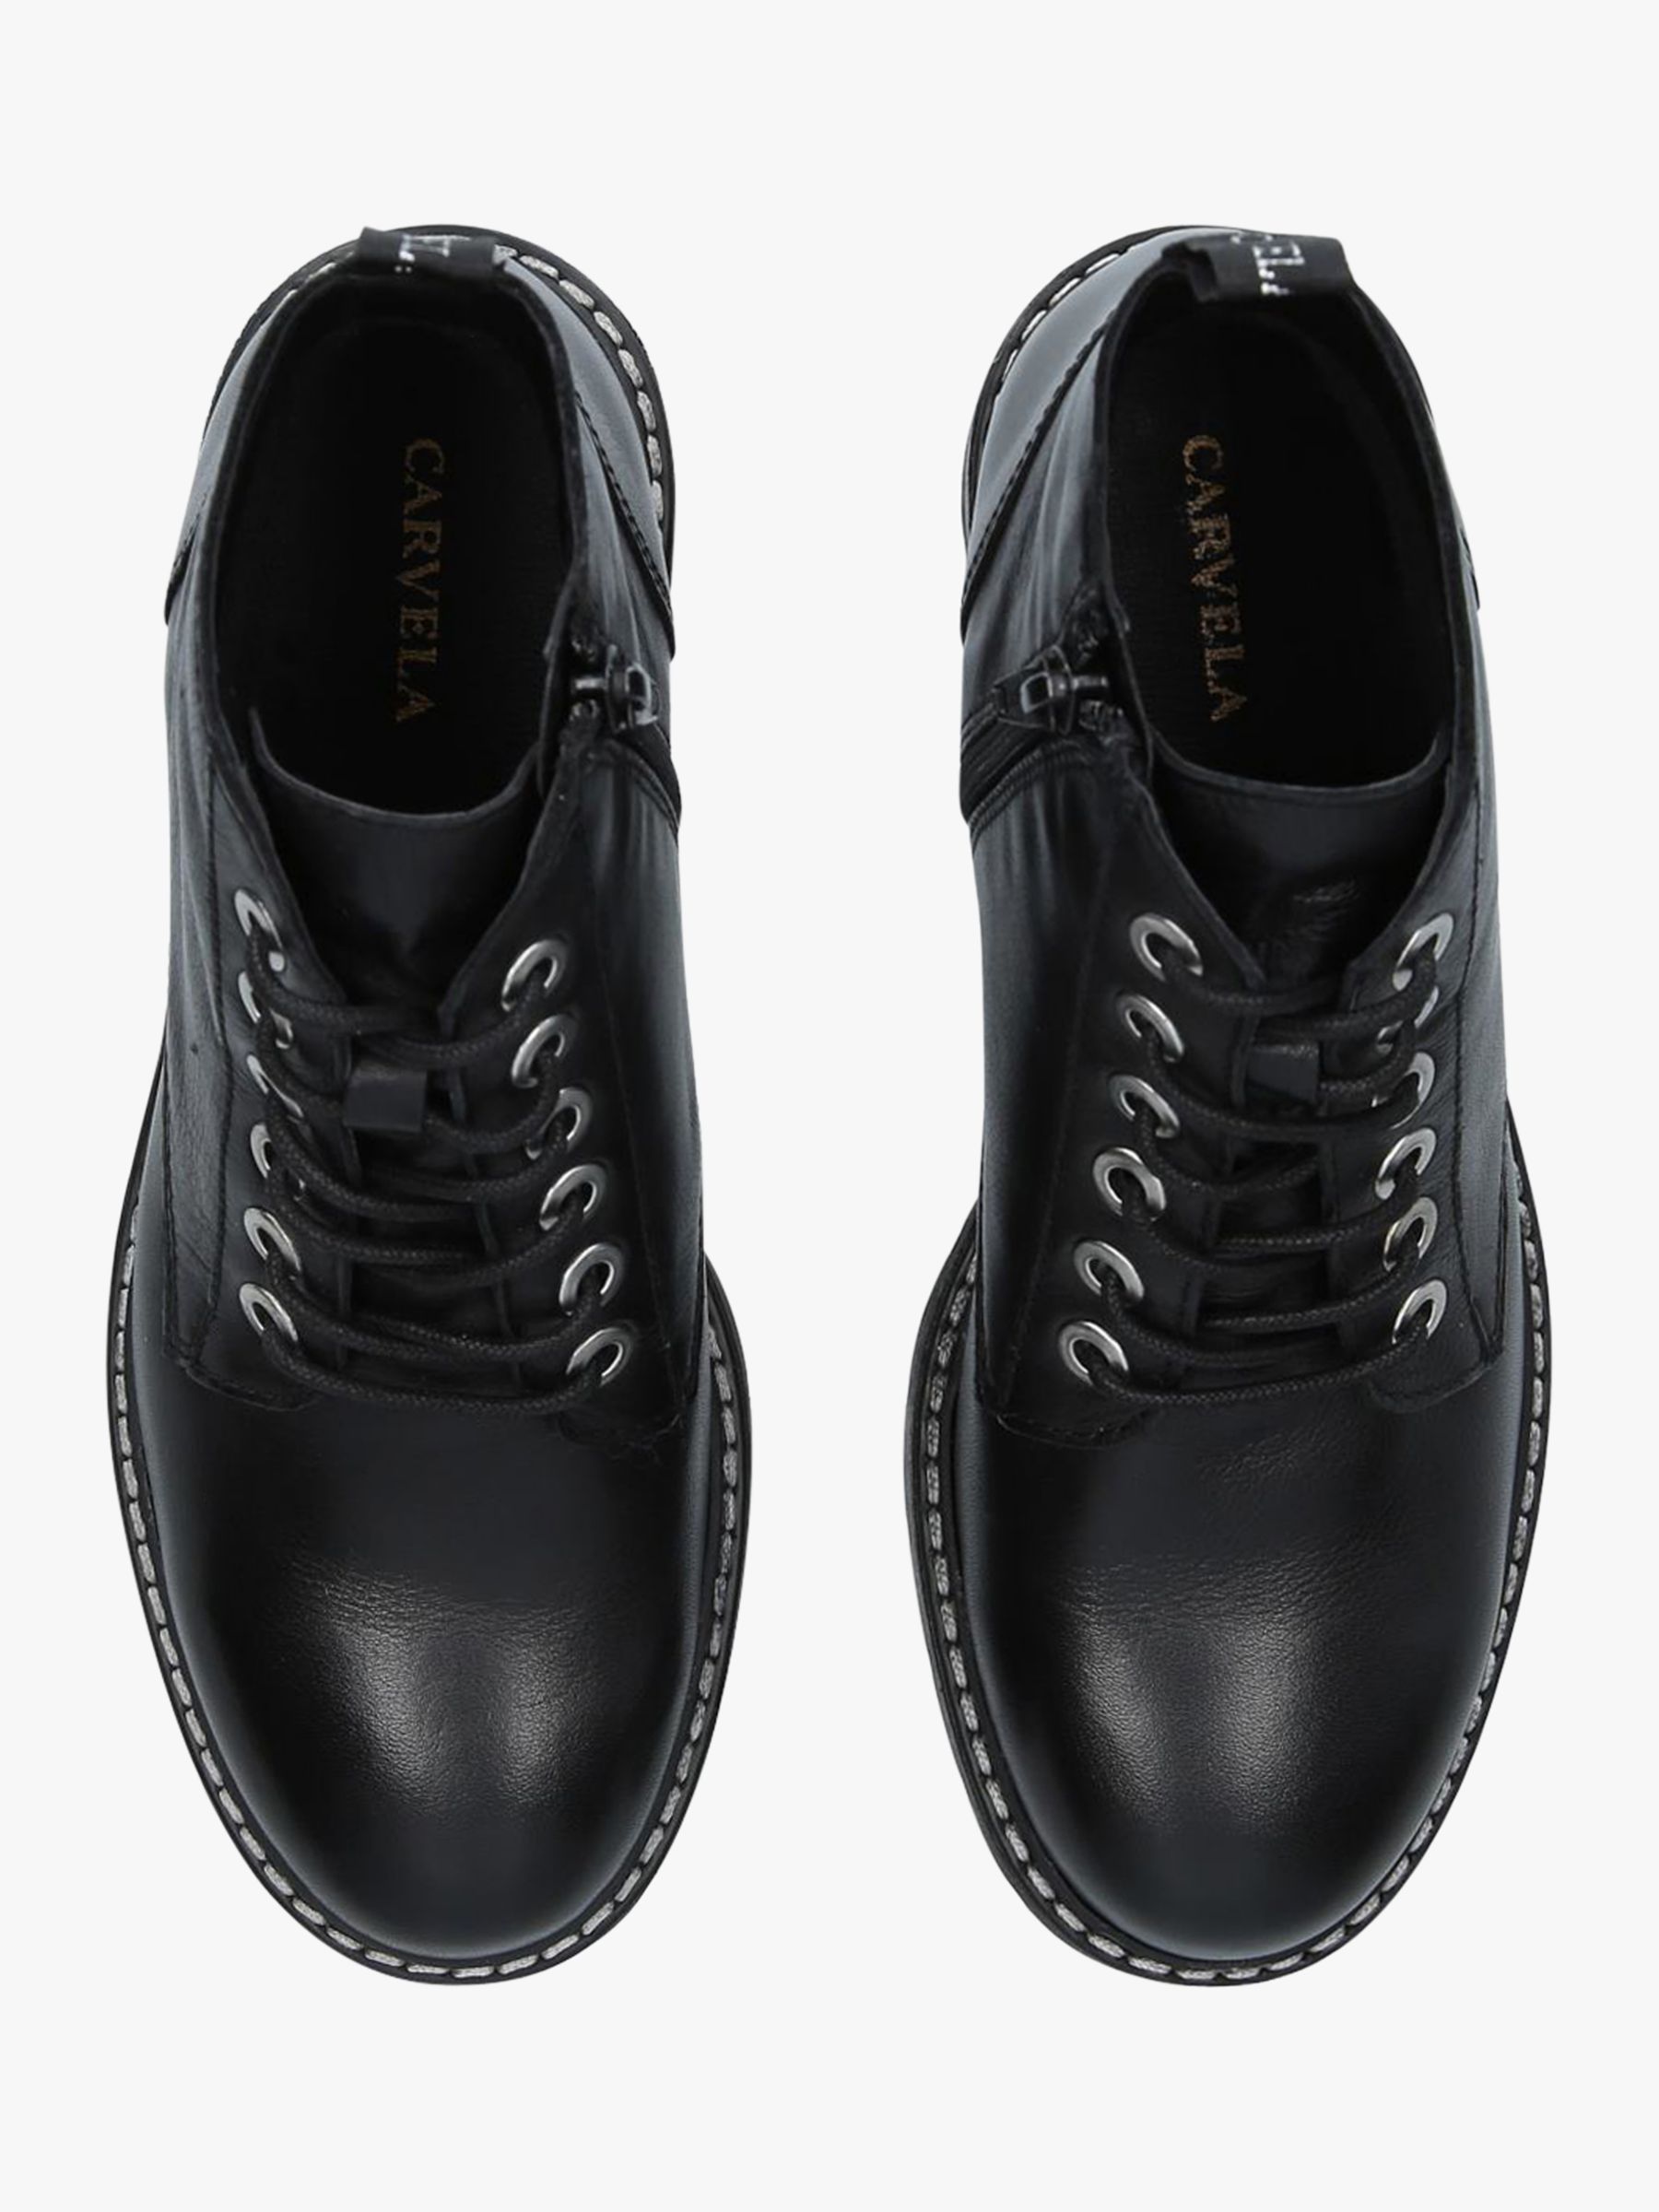 Carvela Trinket Lace Up Leather Ankle Boots, Black